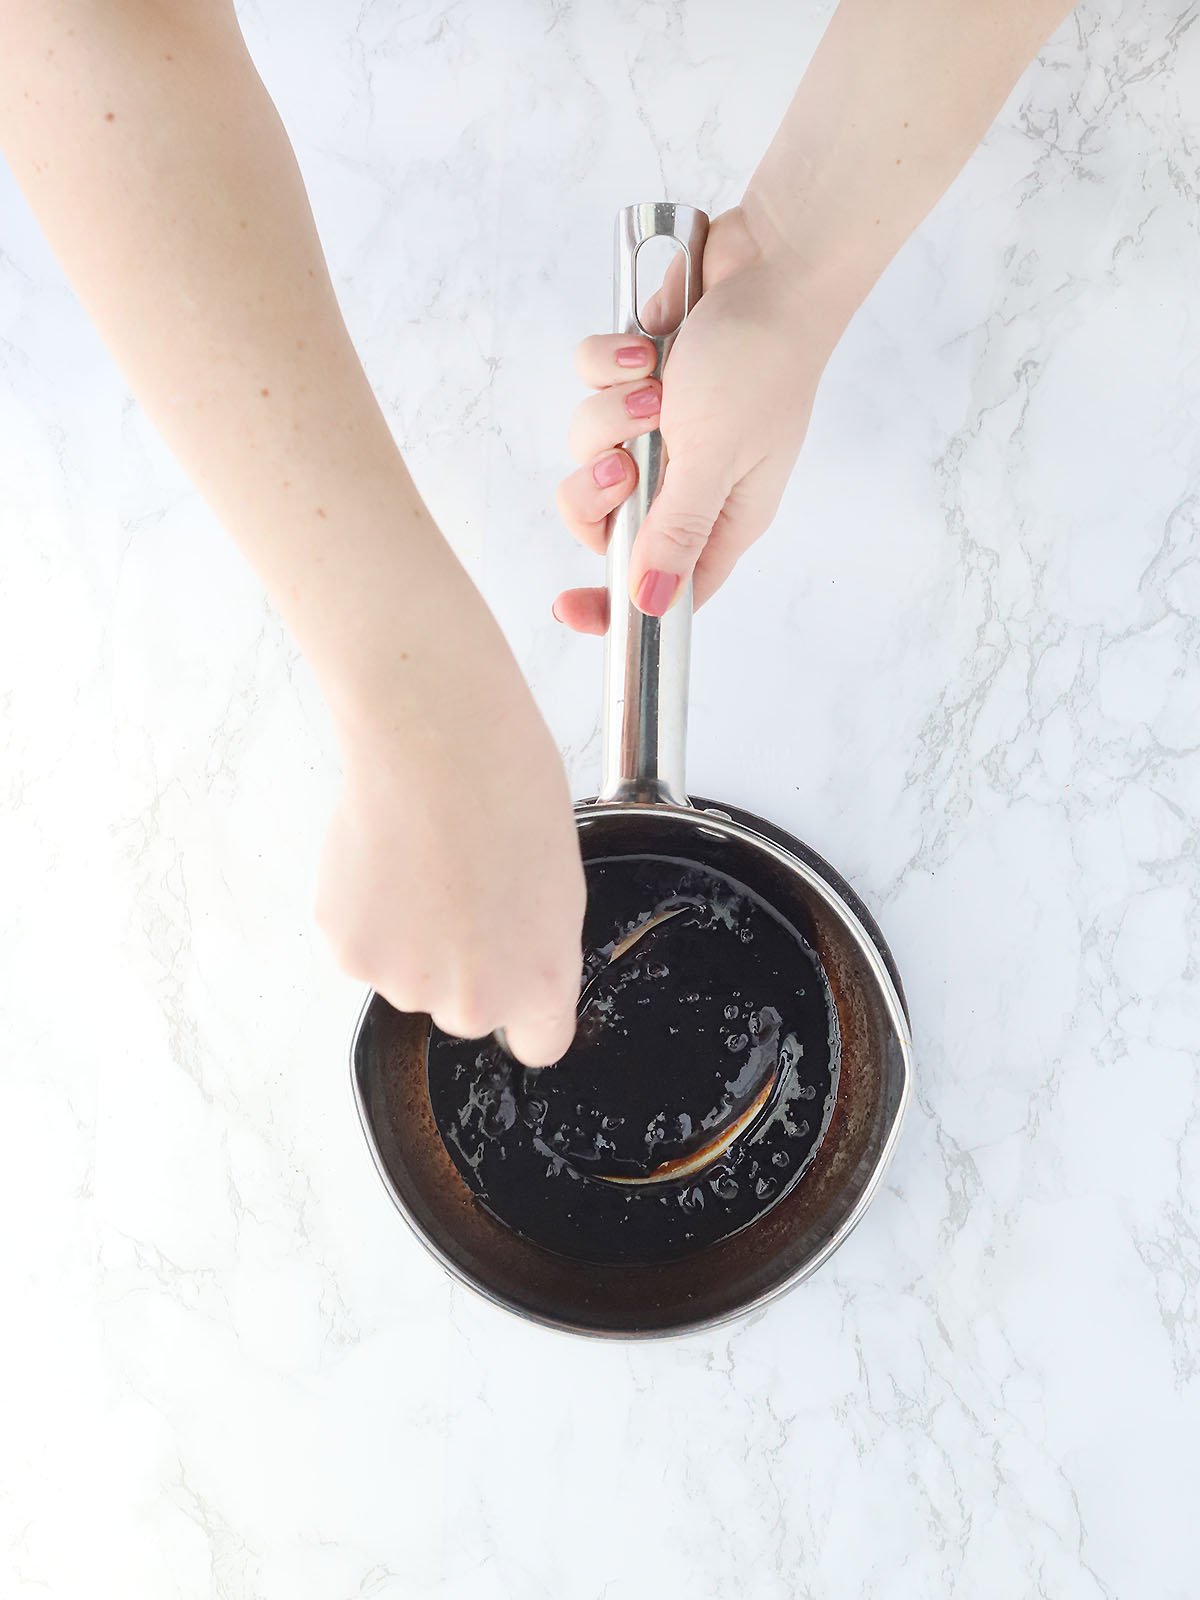 hand stirring molasses glaze in a small saucepan